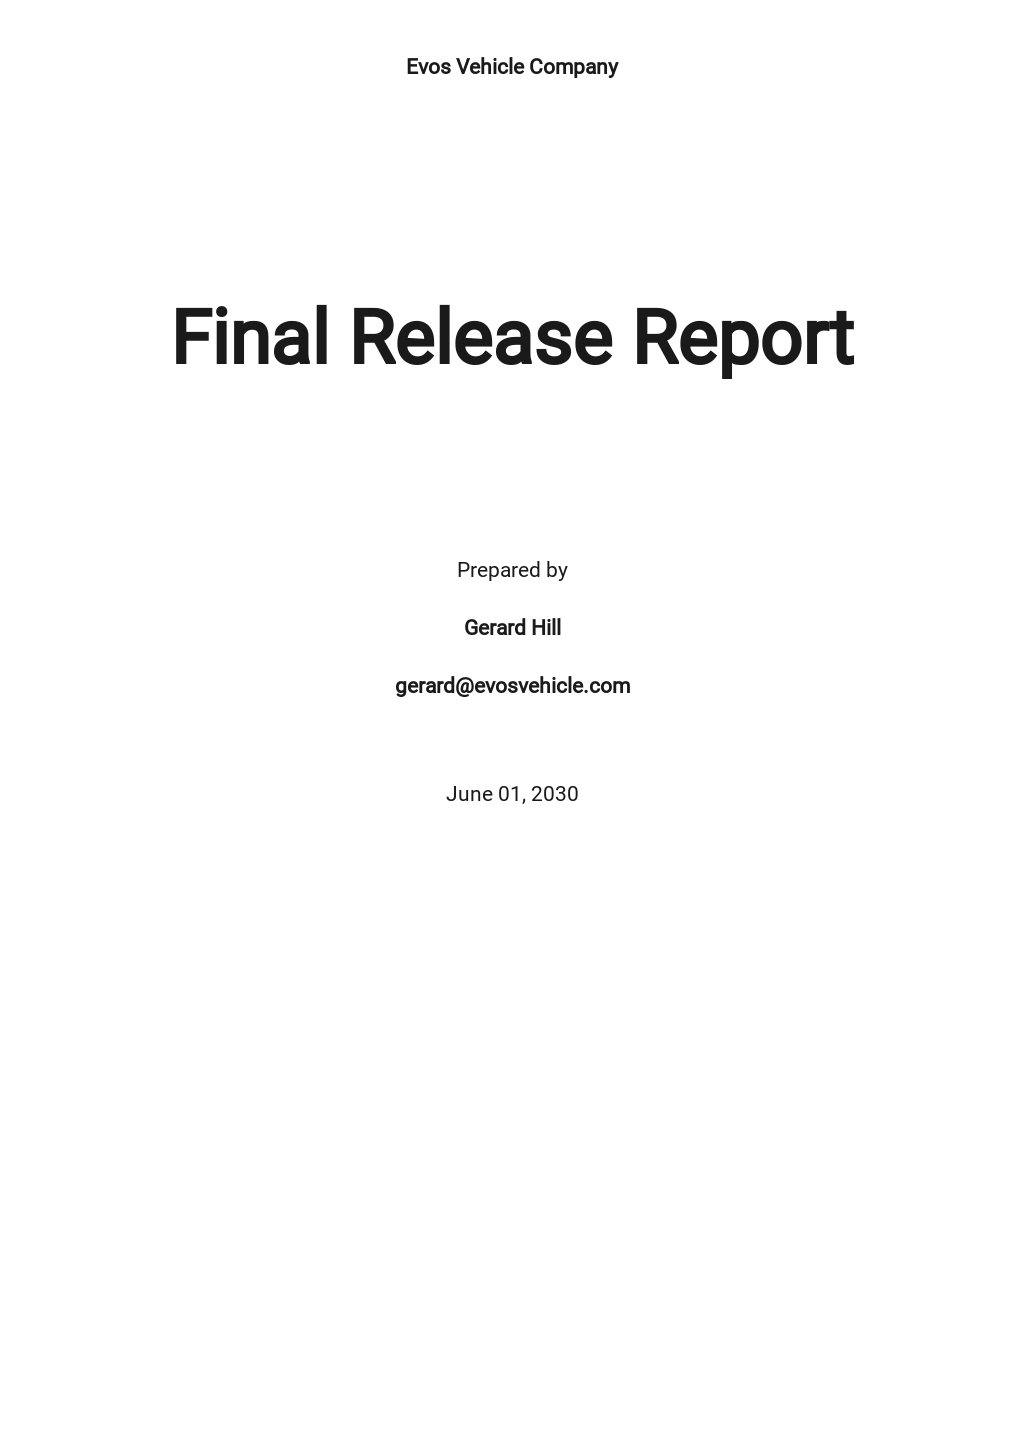 Final Release Report Template.jpe